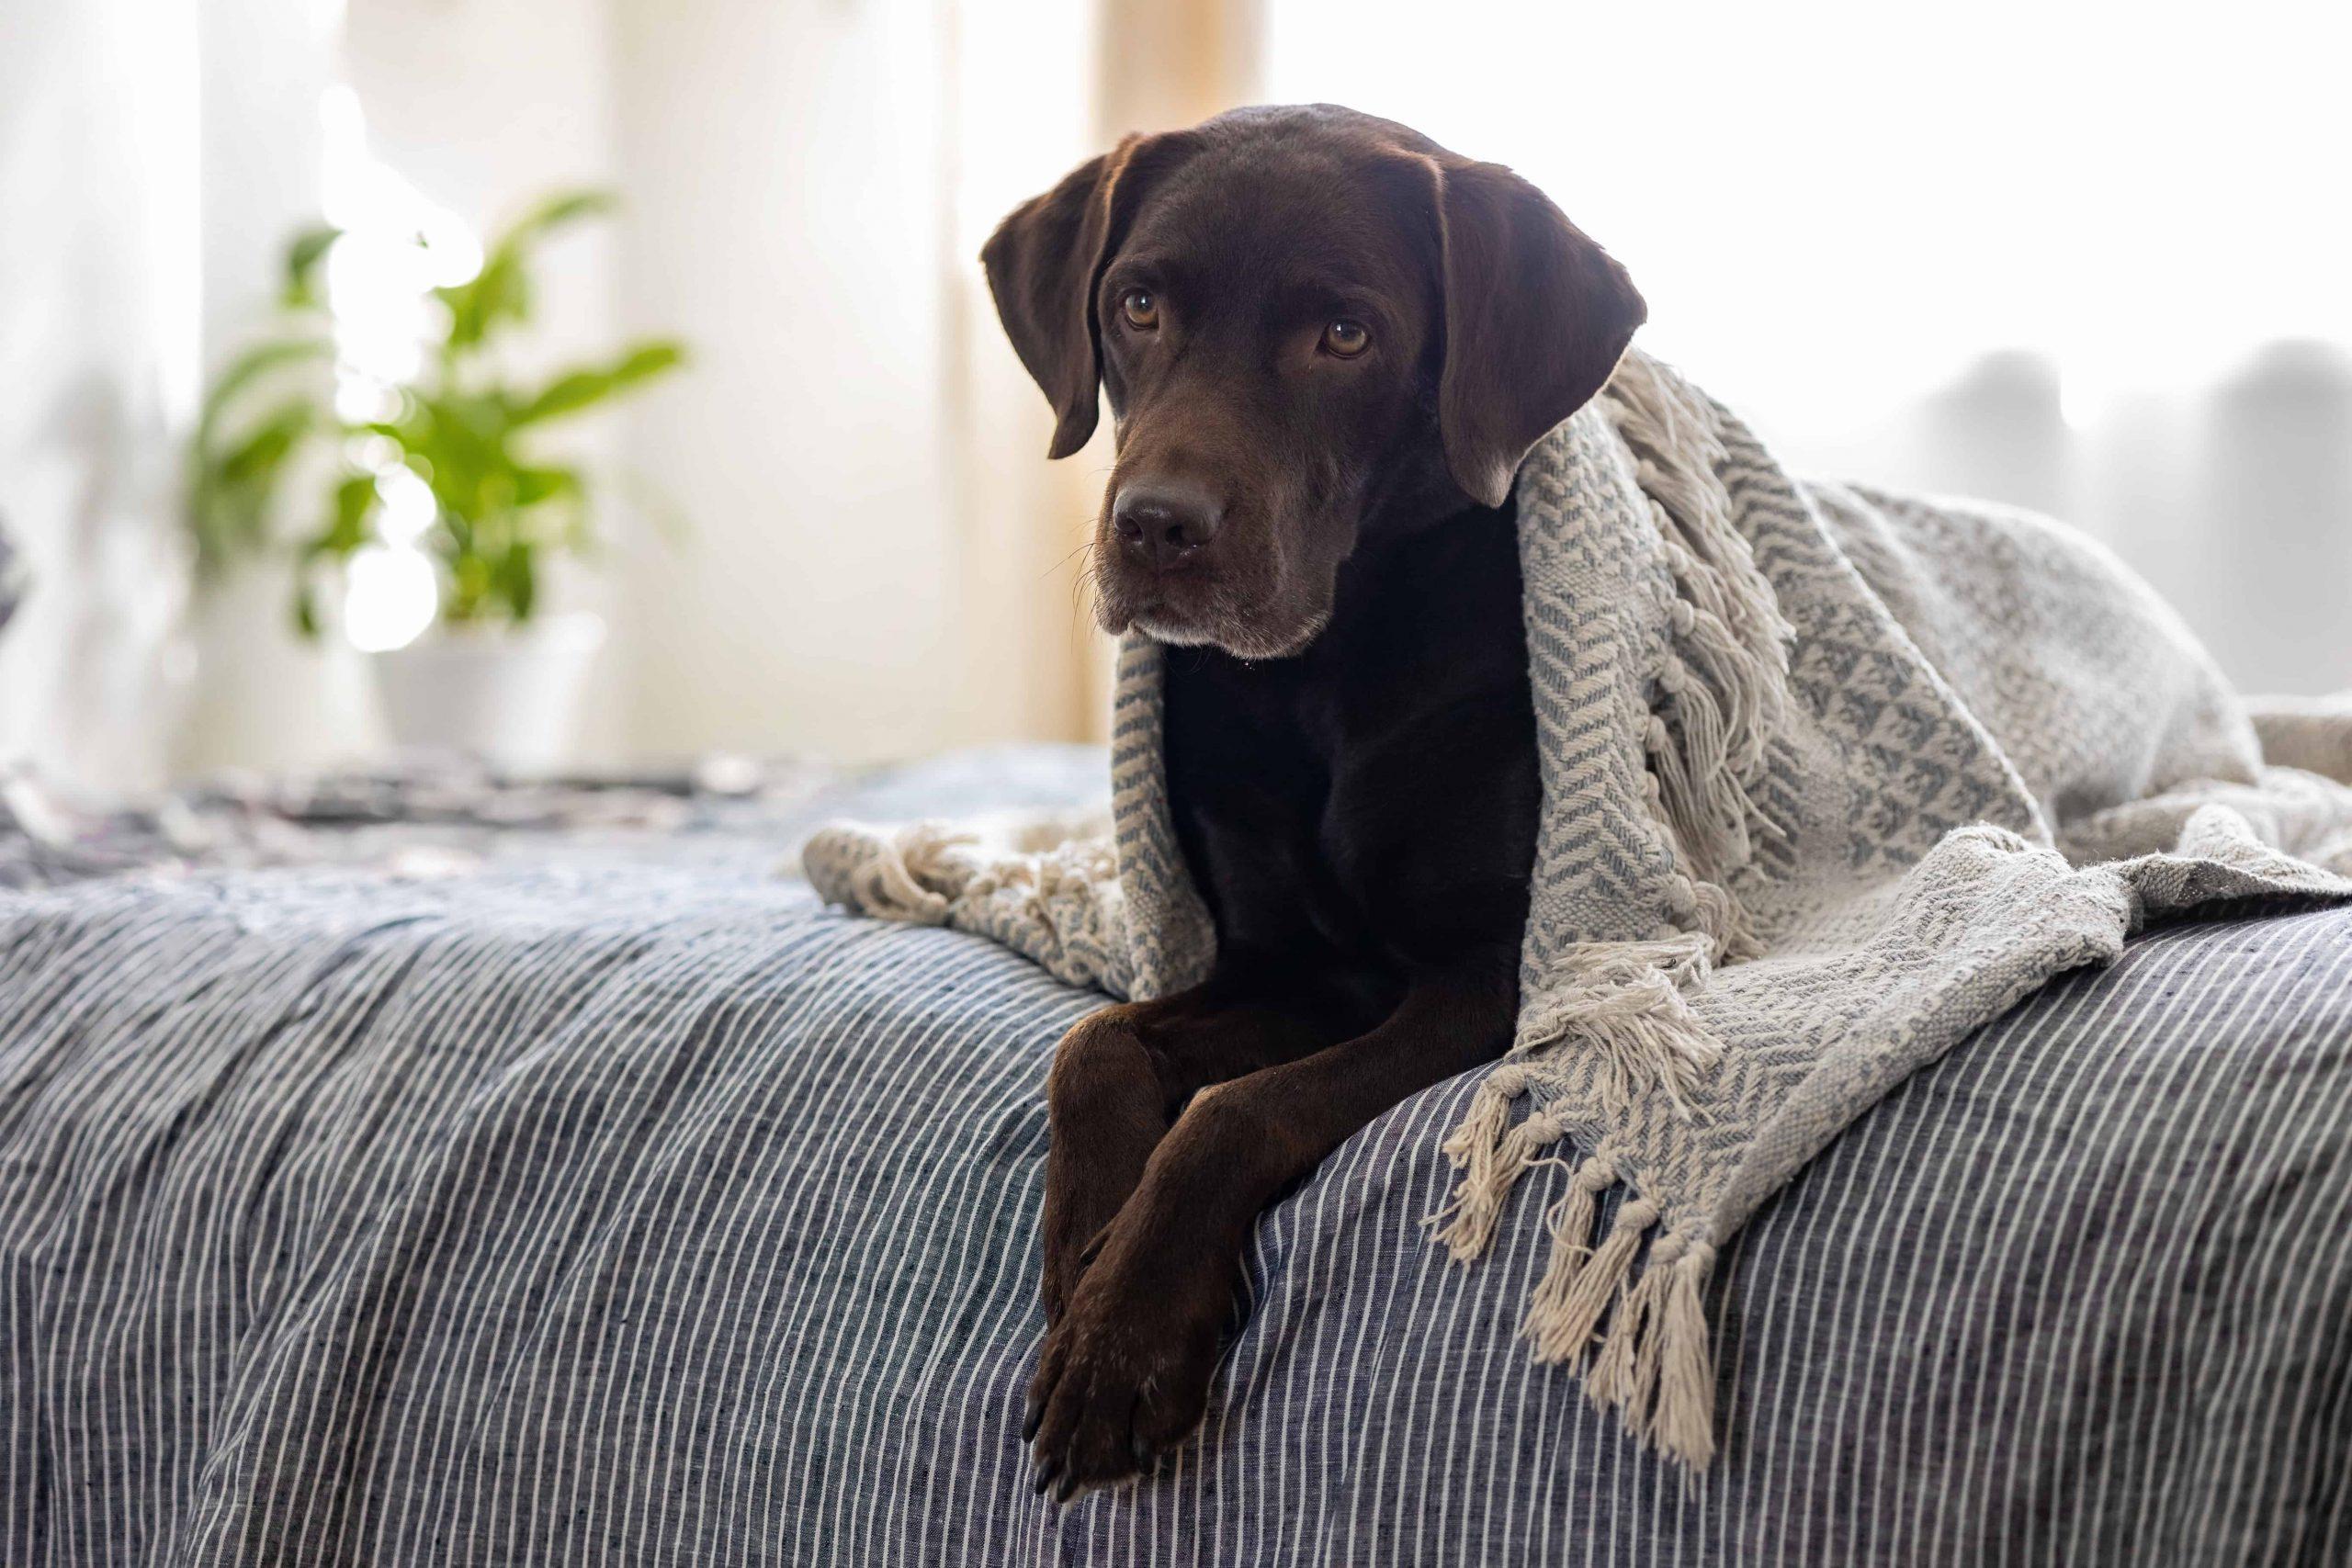 Labrador diesases and symptoms